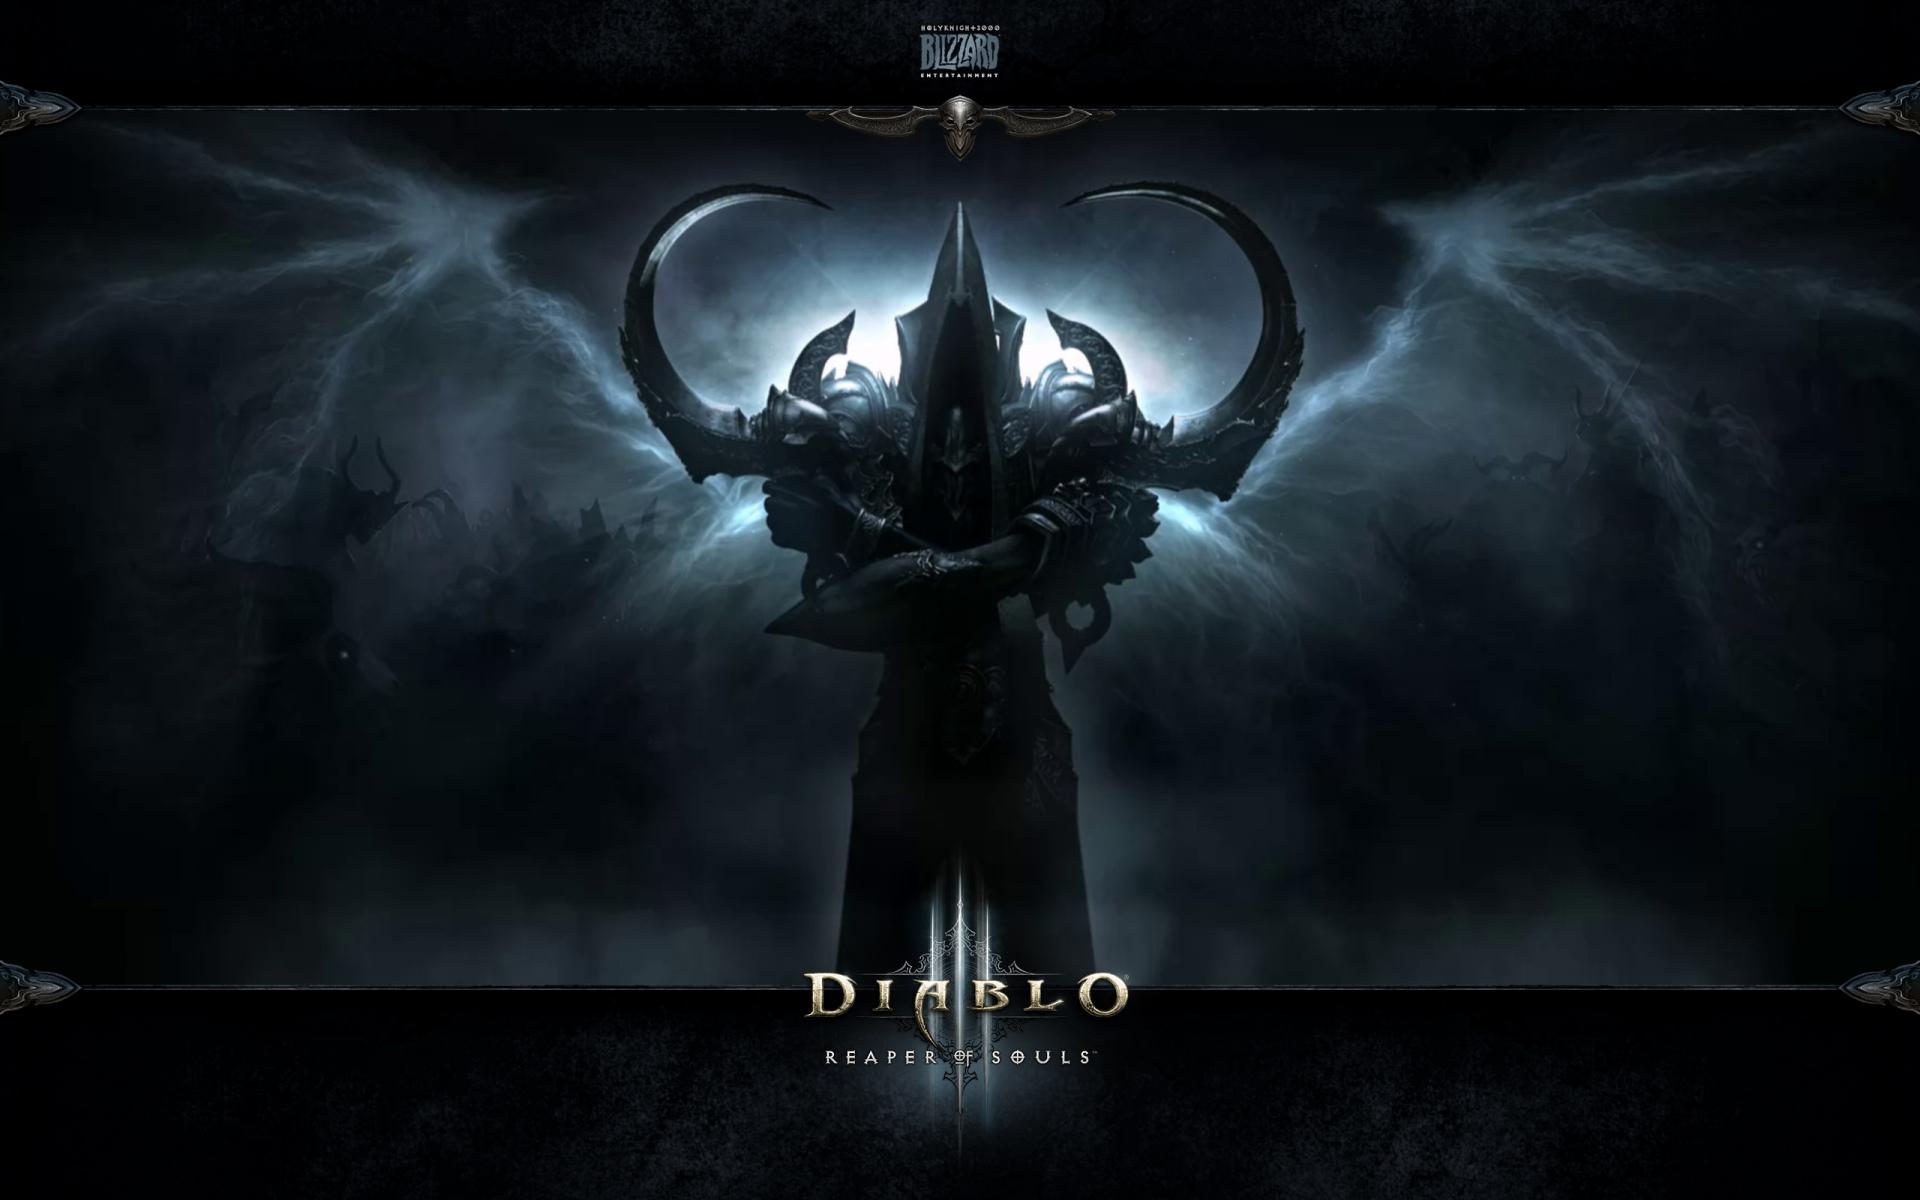 Diablo III Reaper Of Souls at 1024 x 1024 iPad size wallpapers HD quality